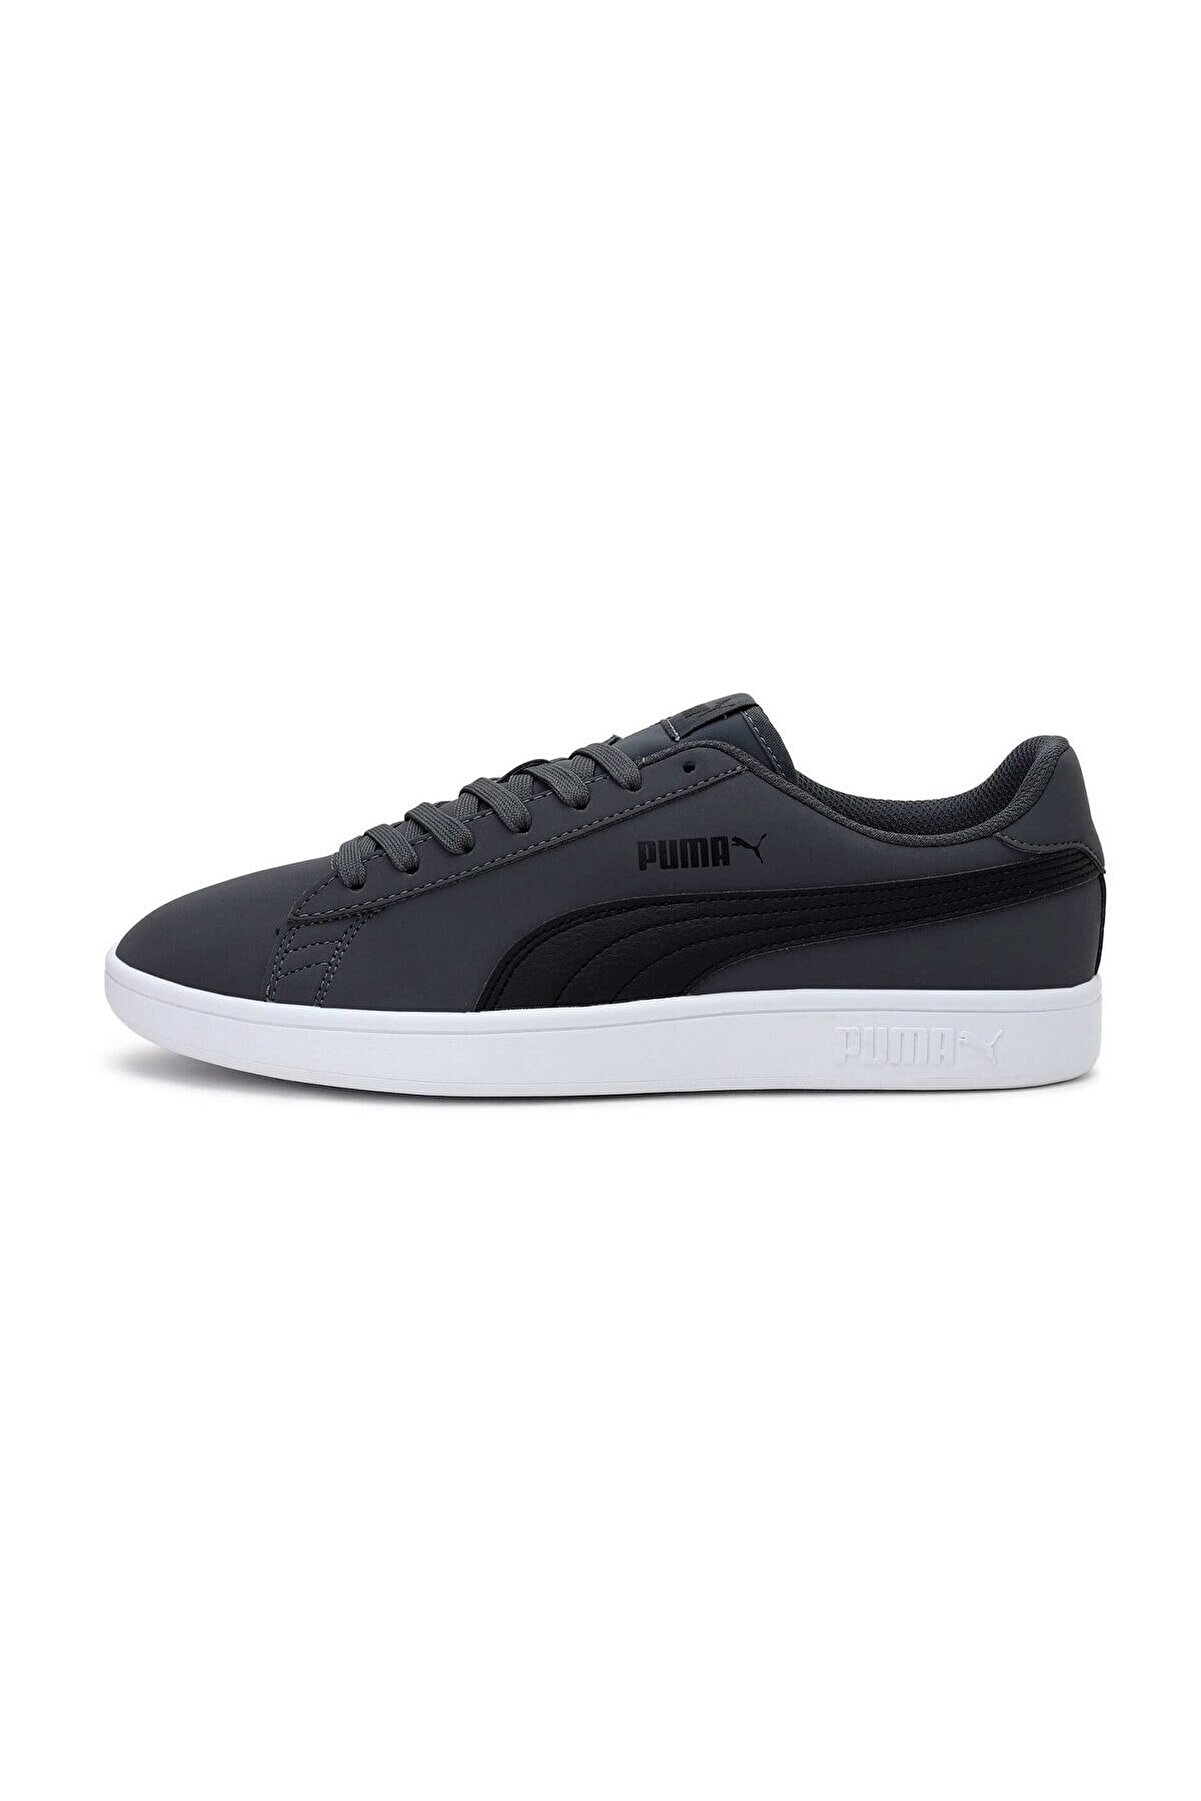 Puma SMASH BUCK V2 TDP Siyah Erkek Sneaker Ayakkabı 101085511